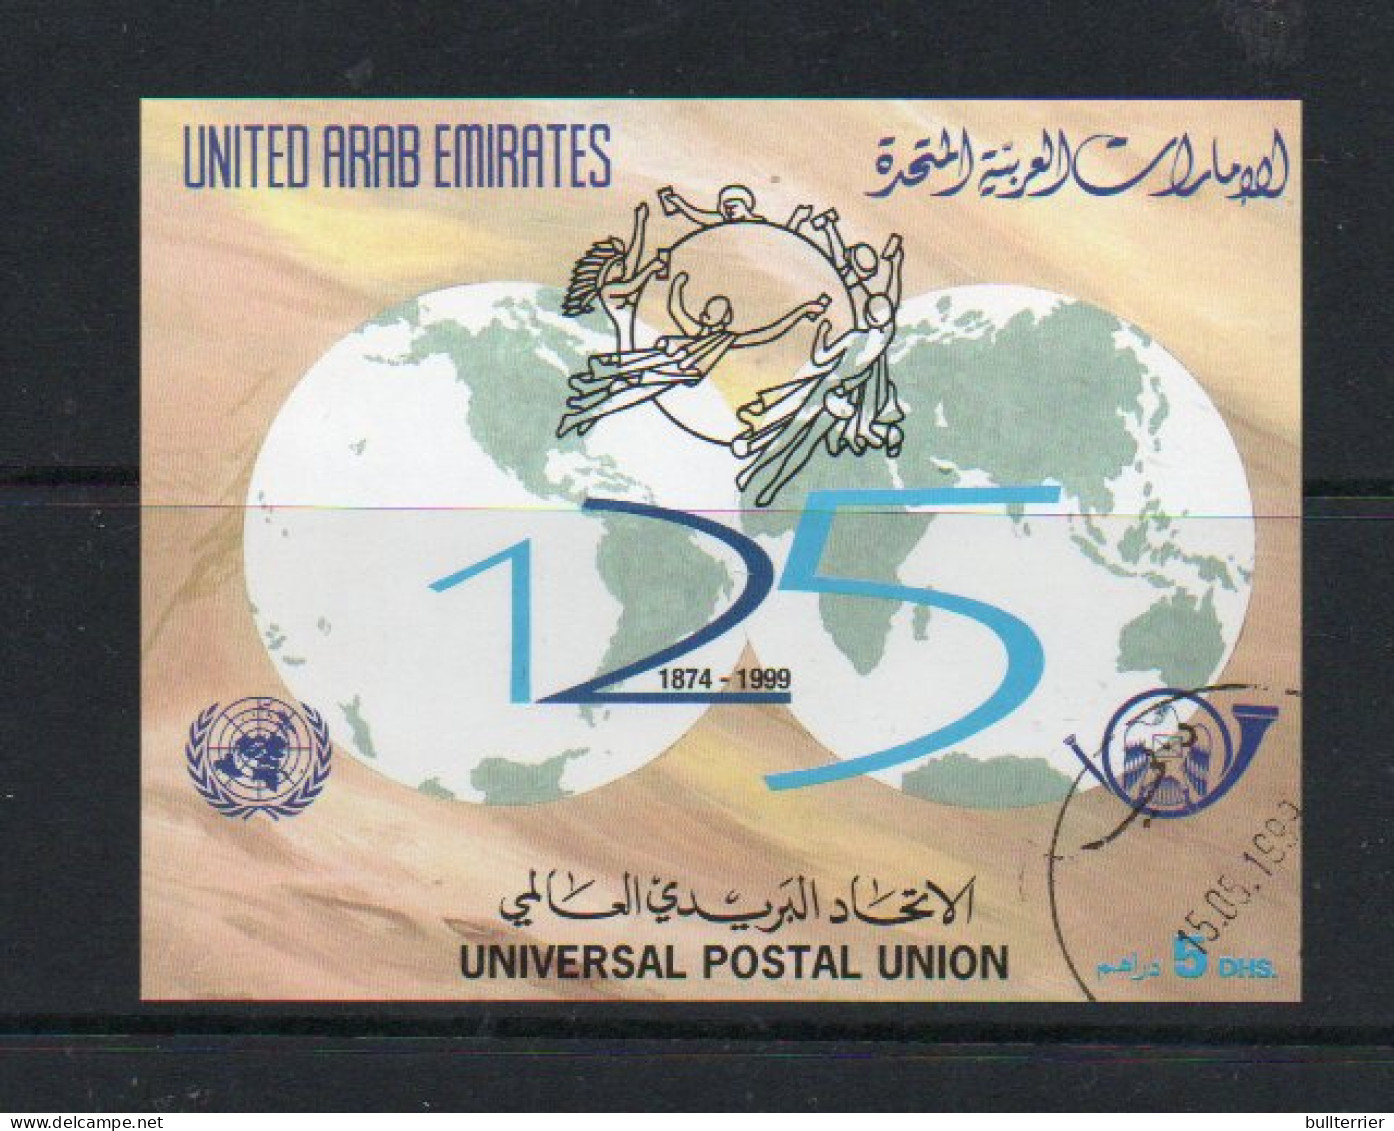 UNITED ARAB EMIRATES - 1999 - UPU SOUVENIR SHEET FINE USED  - United Arab Emirates (General)